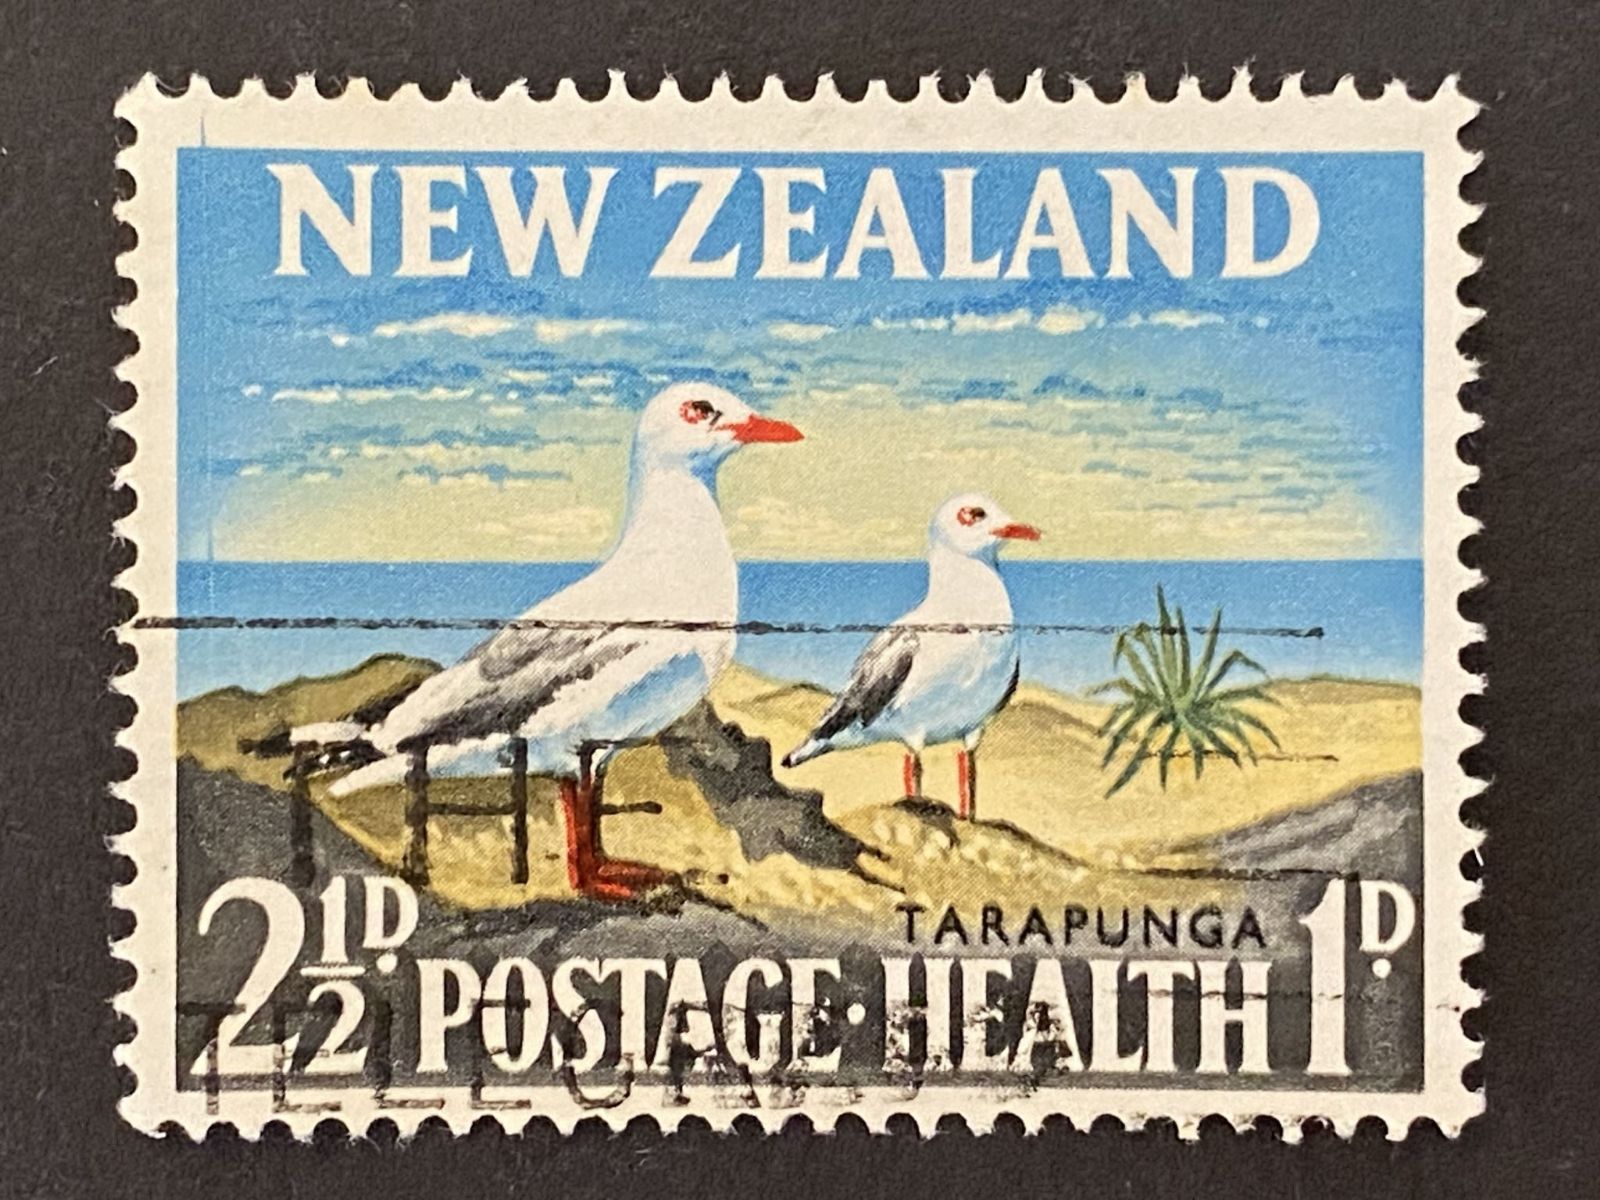 NEW ZEALAND STAMP: Health / Tarapunga 1964